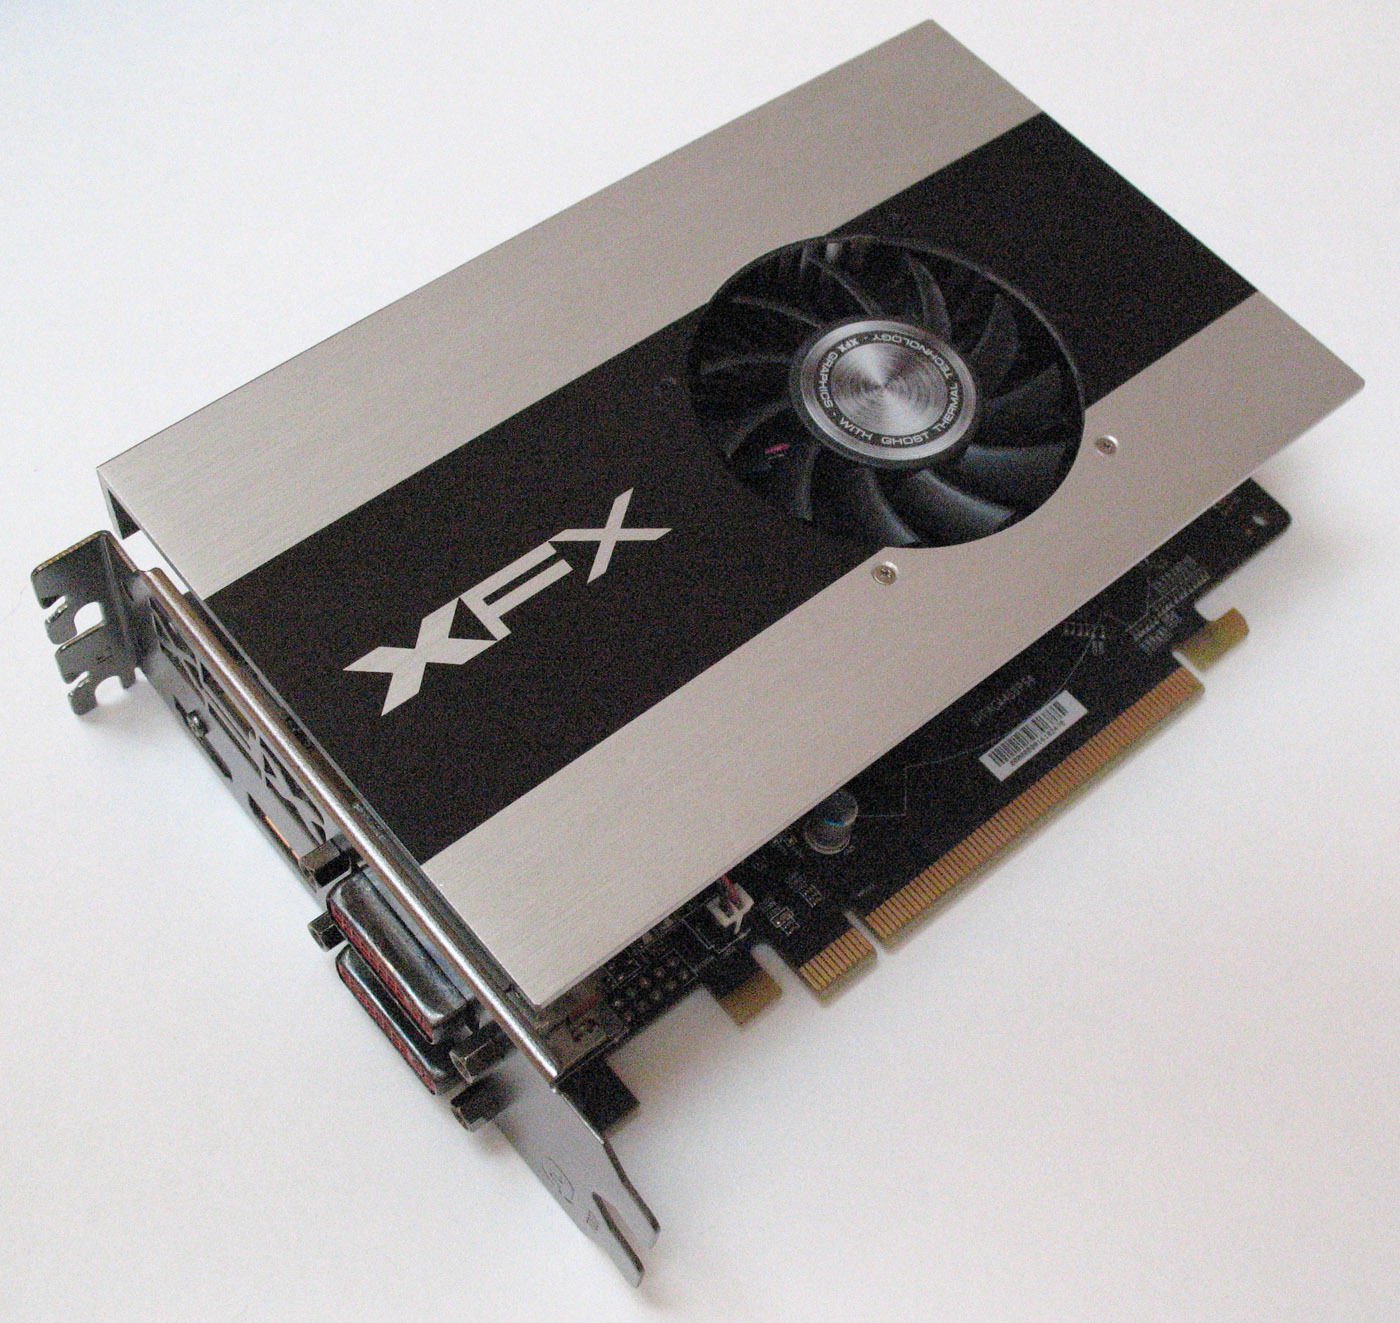 XFX Radeon 7750 2GB Ghost Thermal - FX 